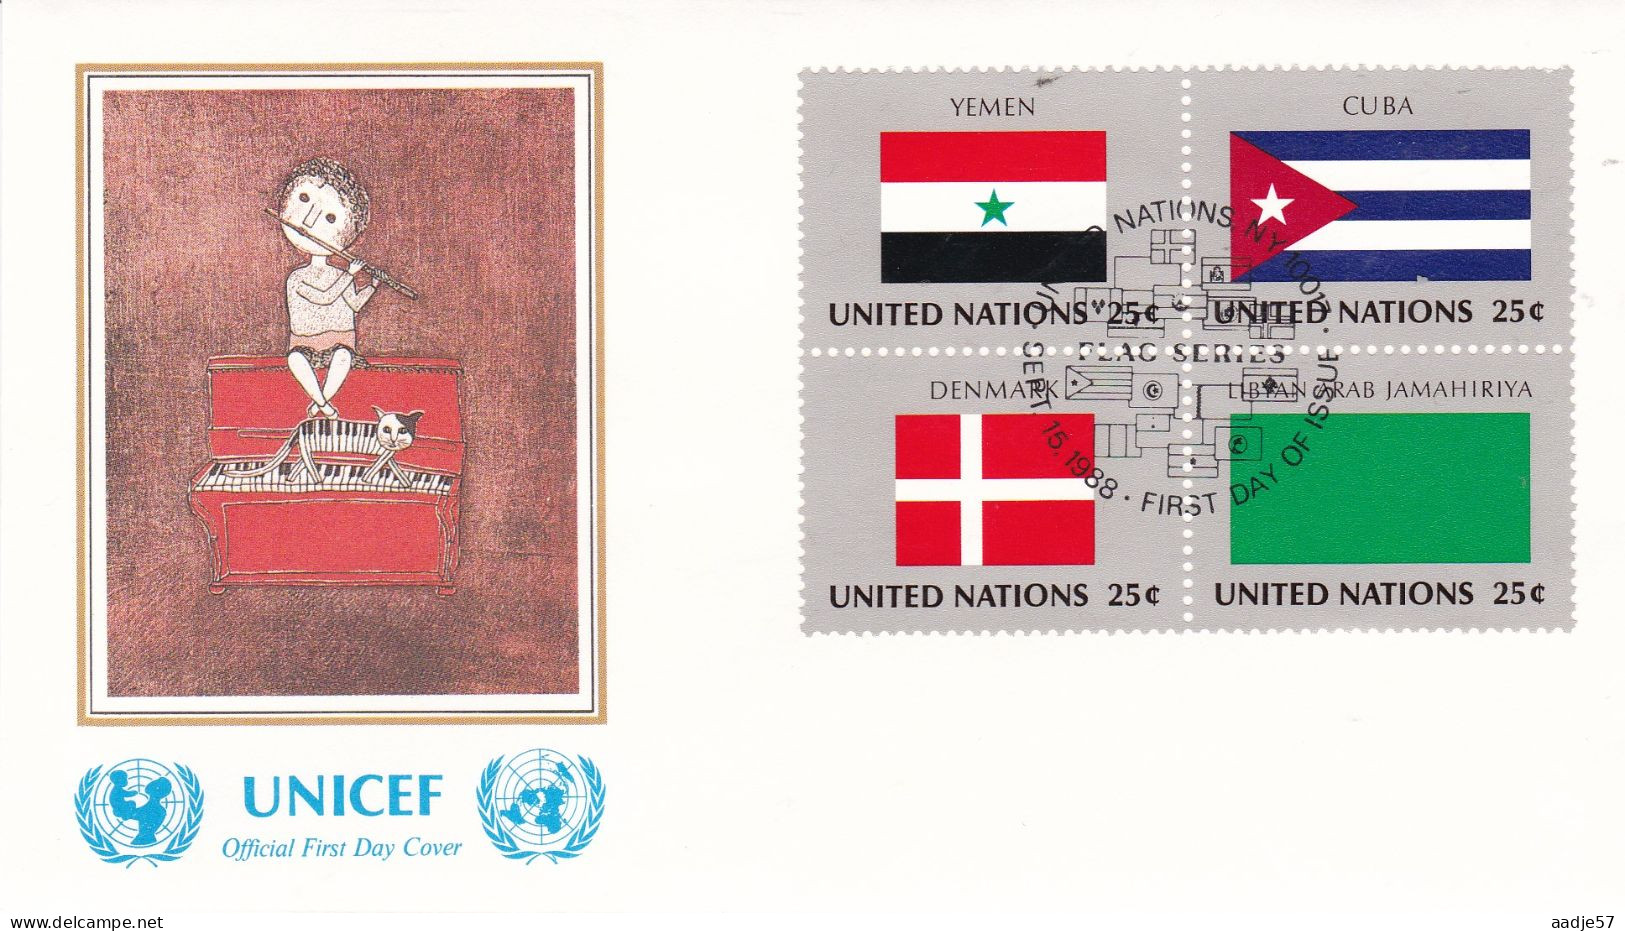 United Nations  1988  Yemen; Cuba; Denmark; Libyan Arab Jamahiriya On Cover Flag Of The Nations - Covers